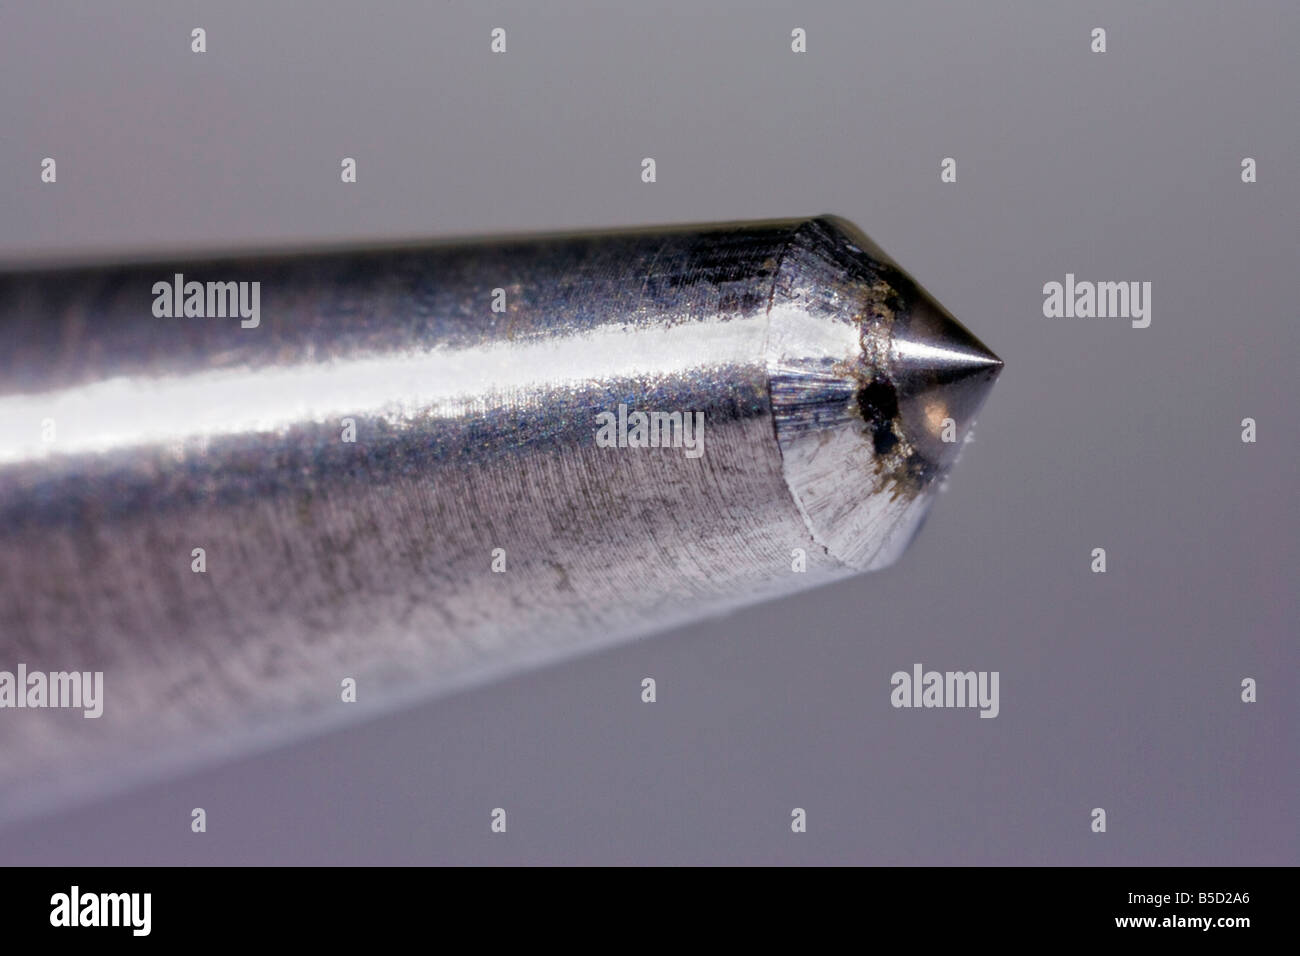 diamond tipped cutting / engraving / scriber tool Stock Photo